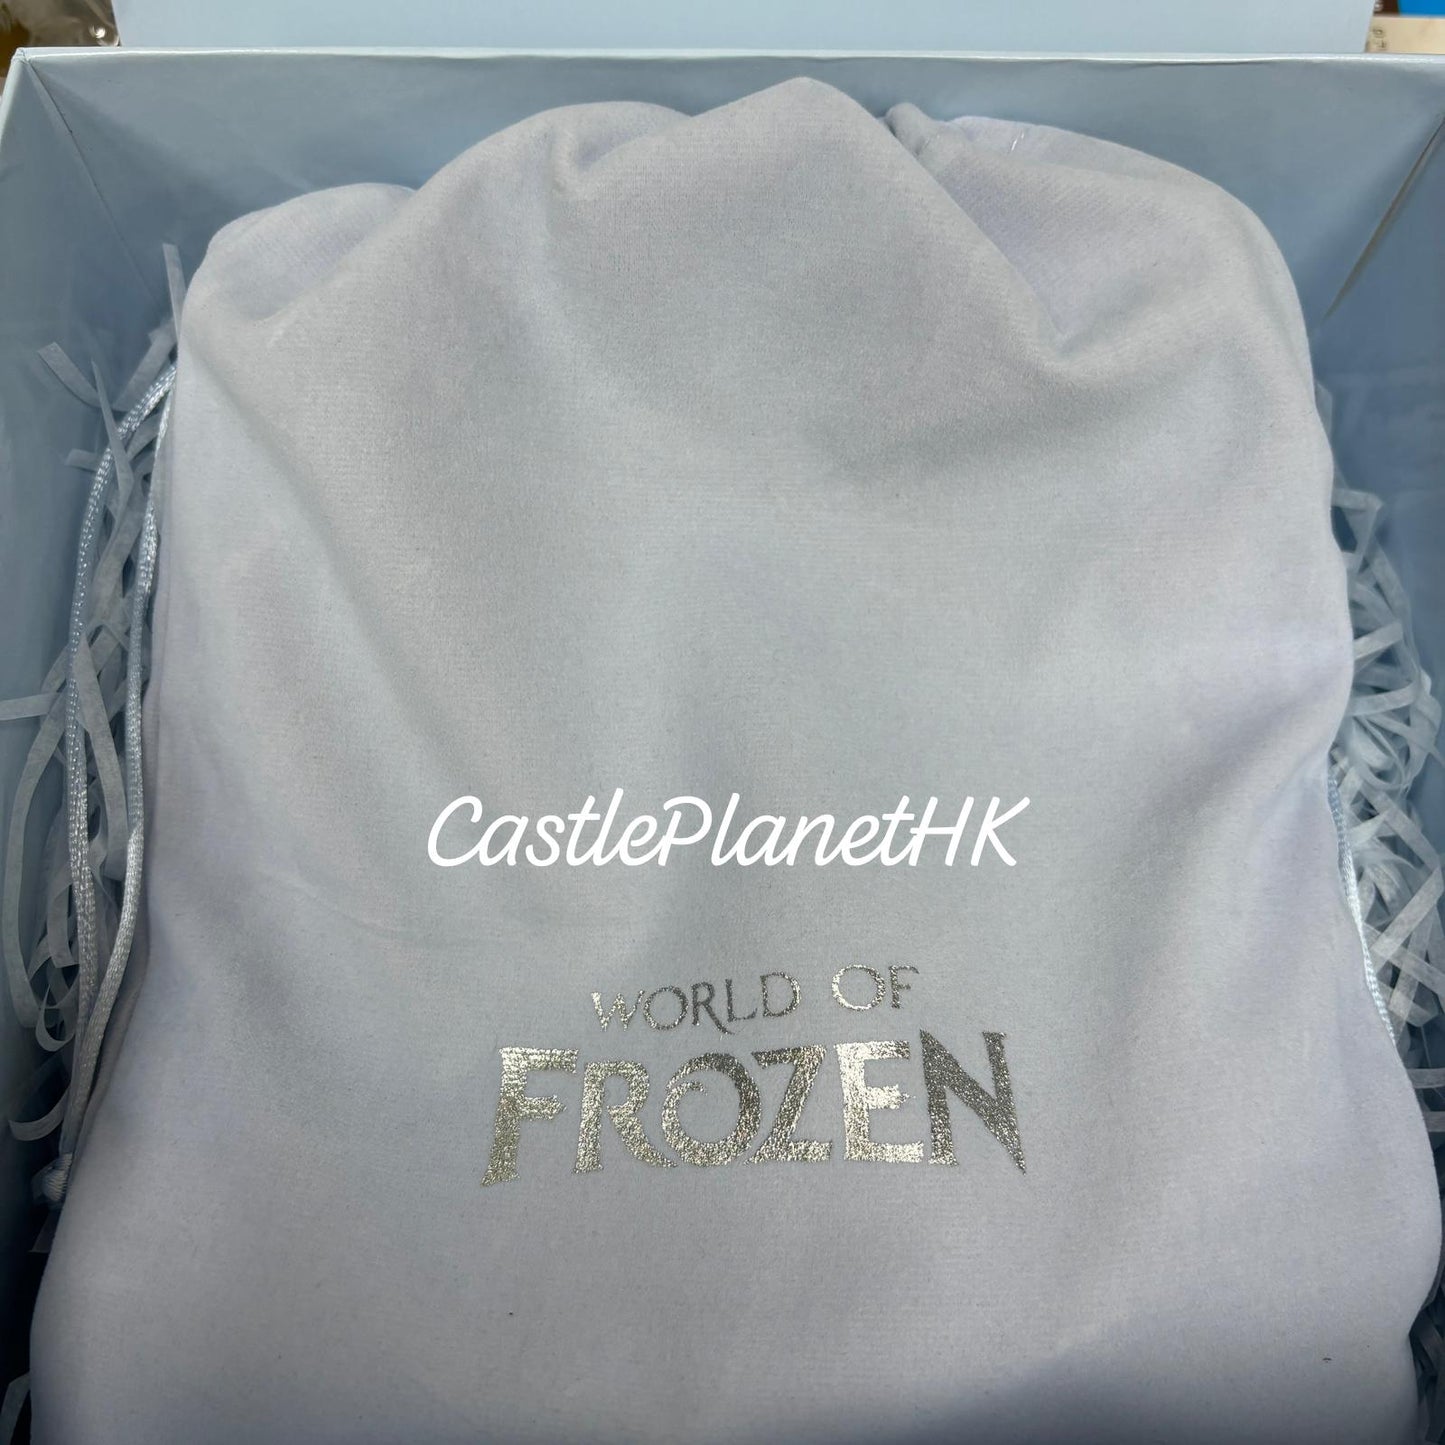 "Pre-Order" HKDL - World of Frozen Exclusive Tiara